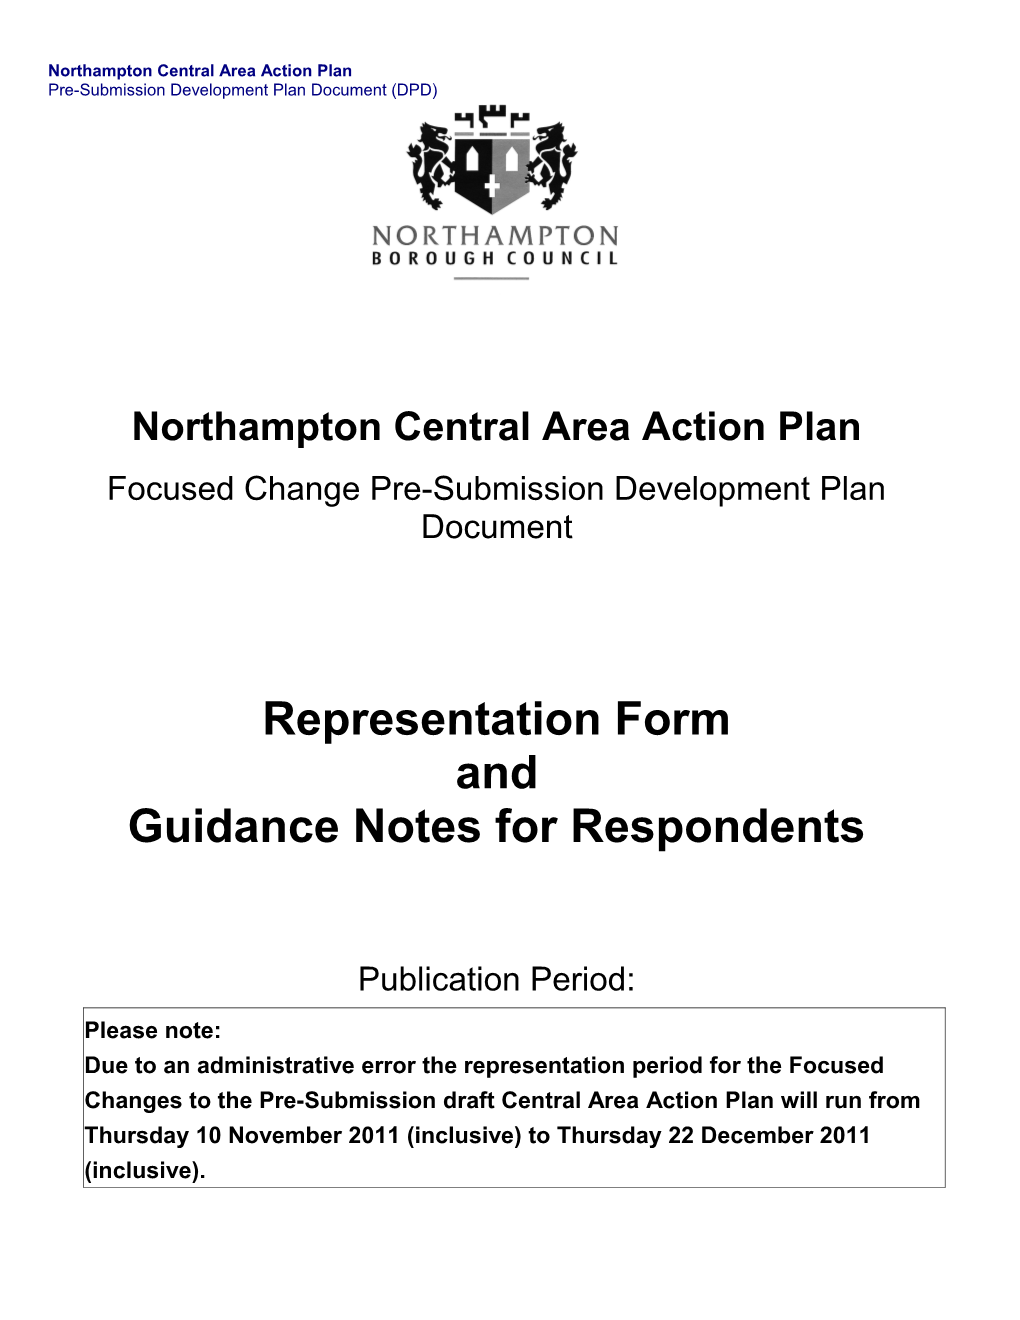 Crossrail Corridor Area Action Plan